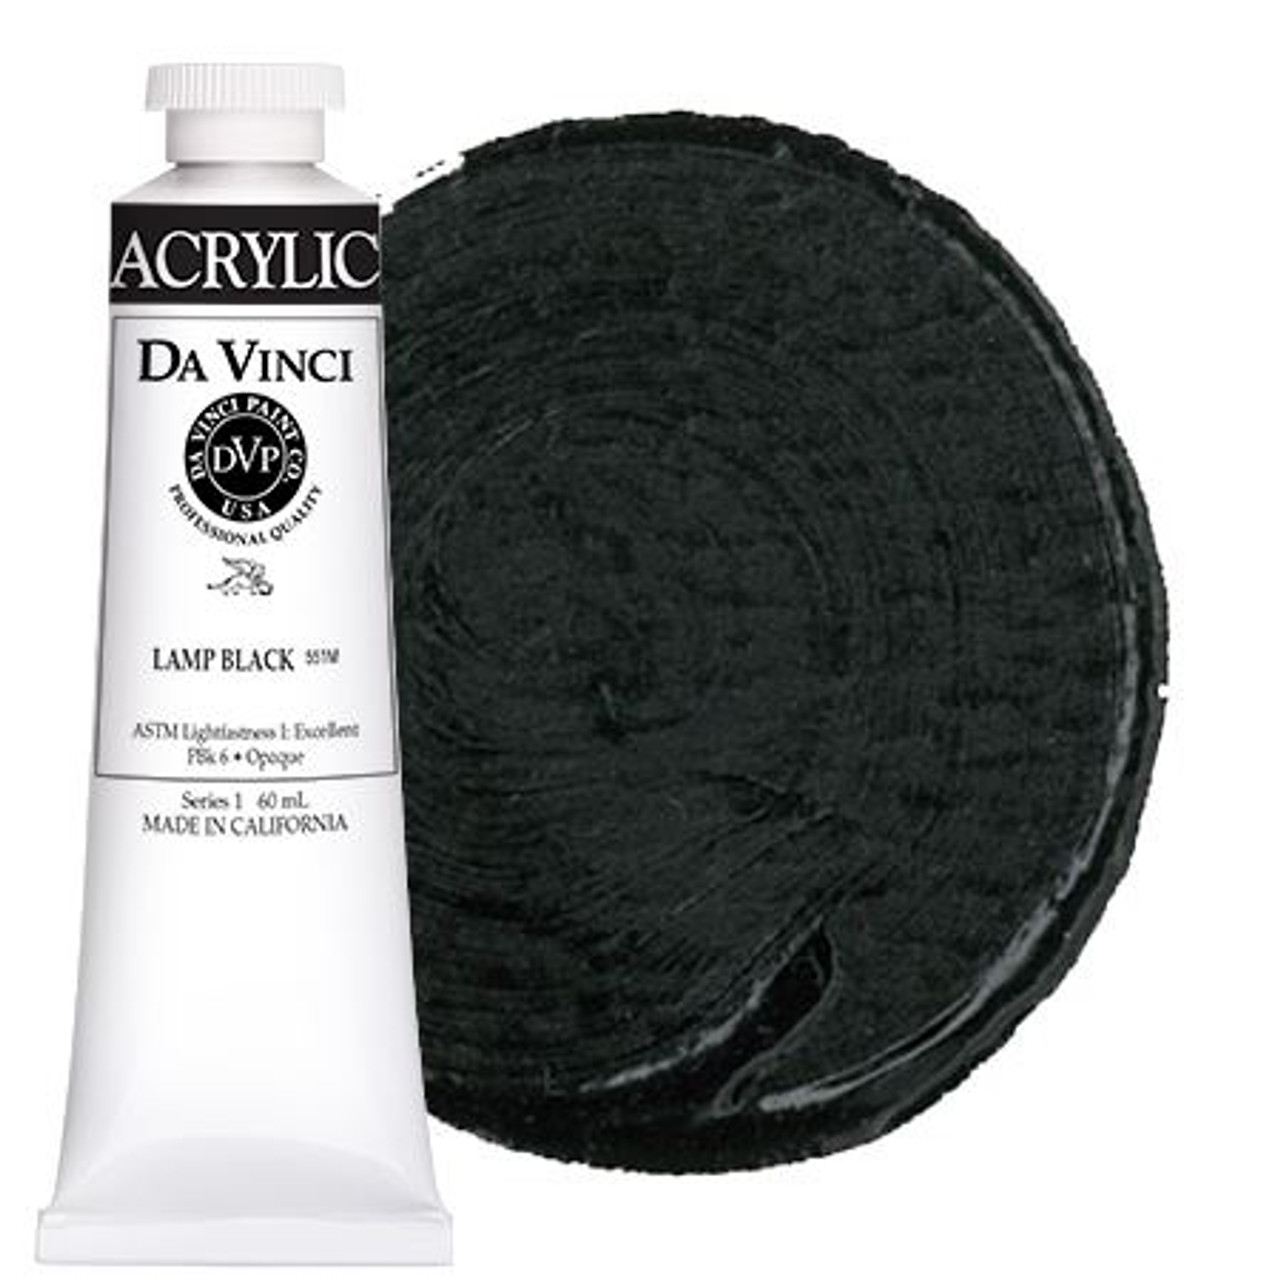 Lamp Black (Carbon Black) (60mL HB Acrylic)